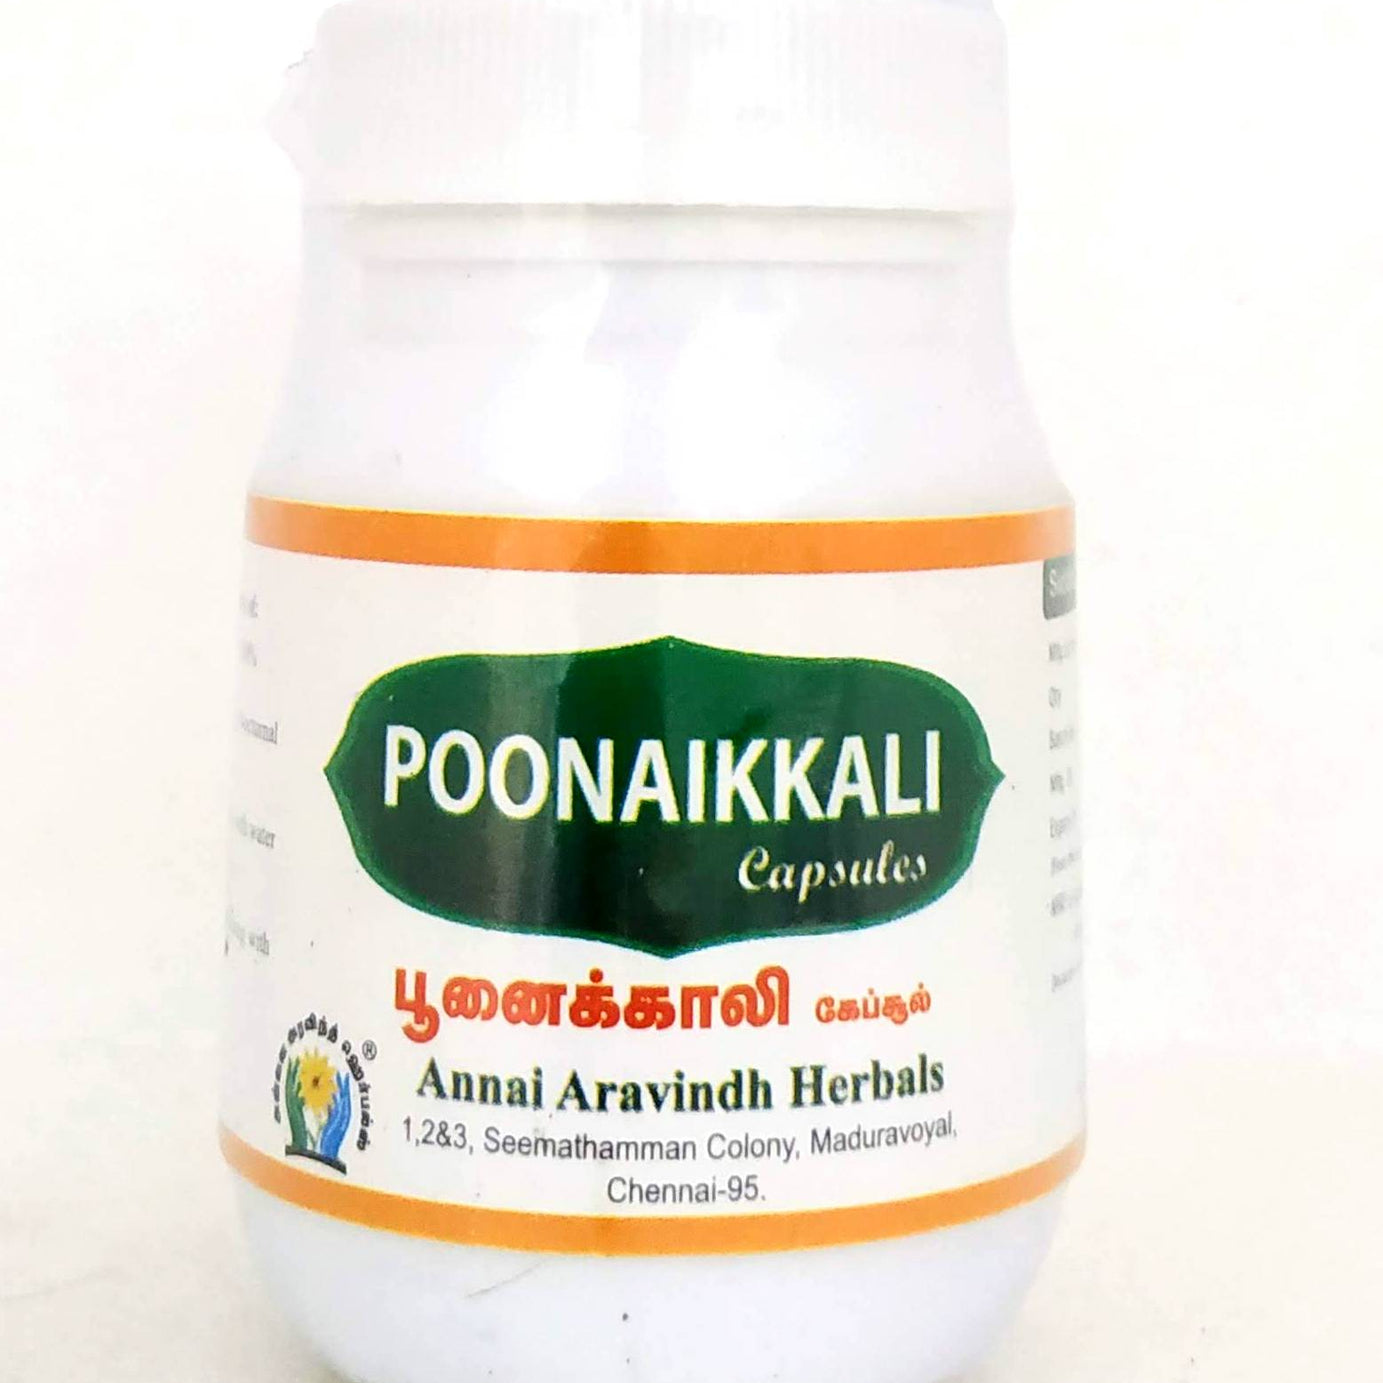 Shop Poonaikali capsules - 30Capsules at price 75.00 from Annai Aravindh Online - Ayush Care